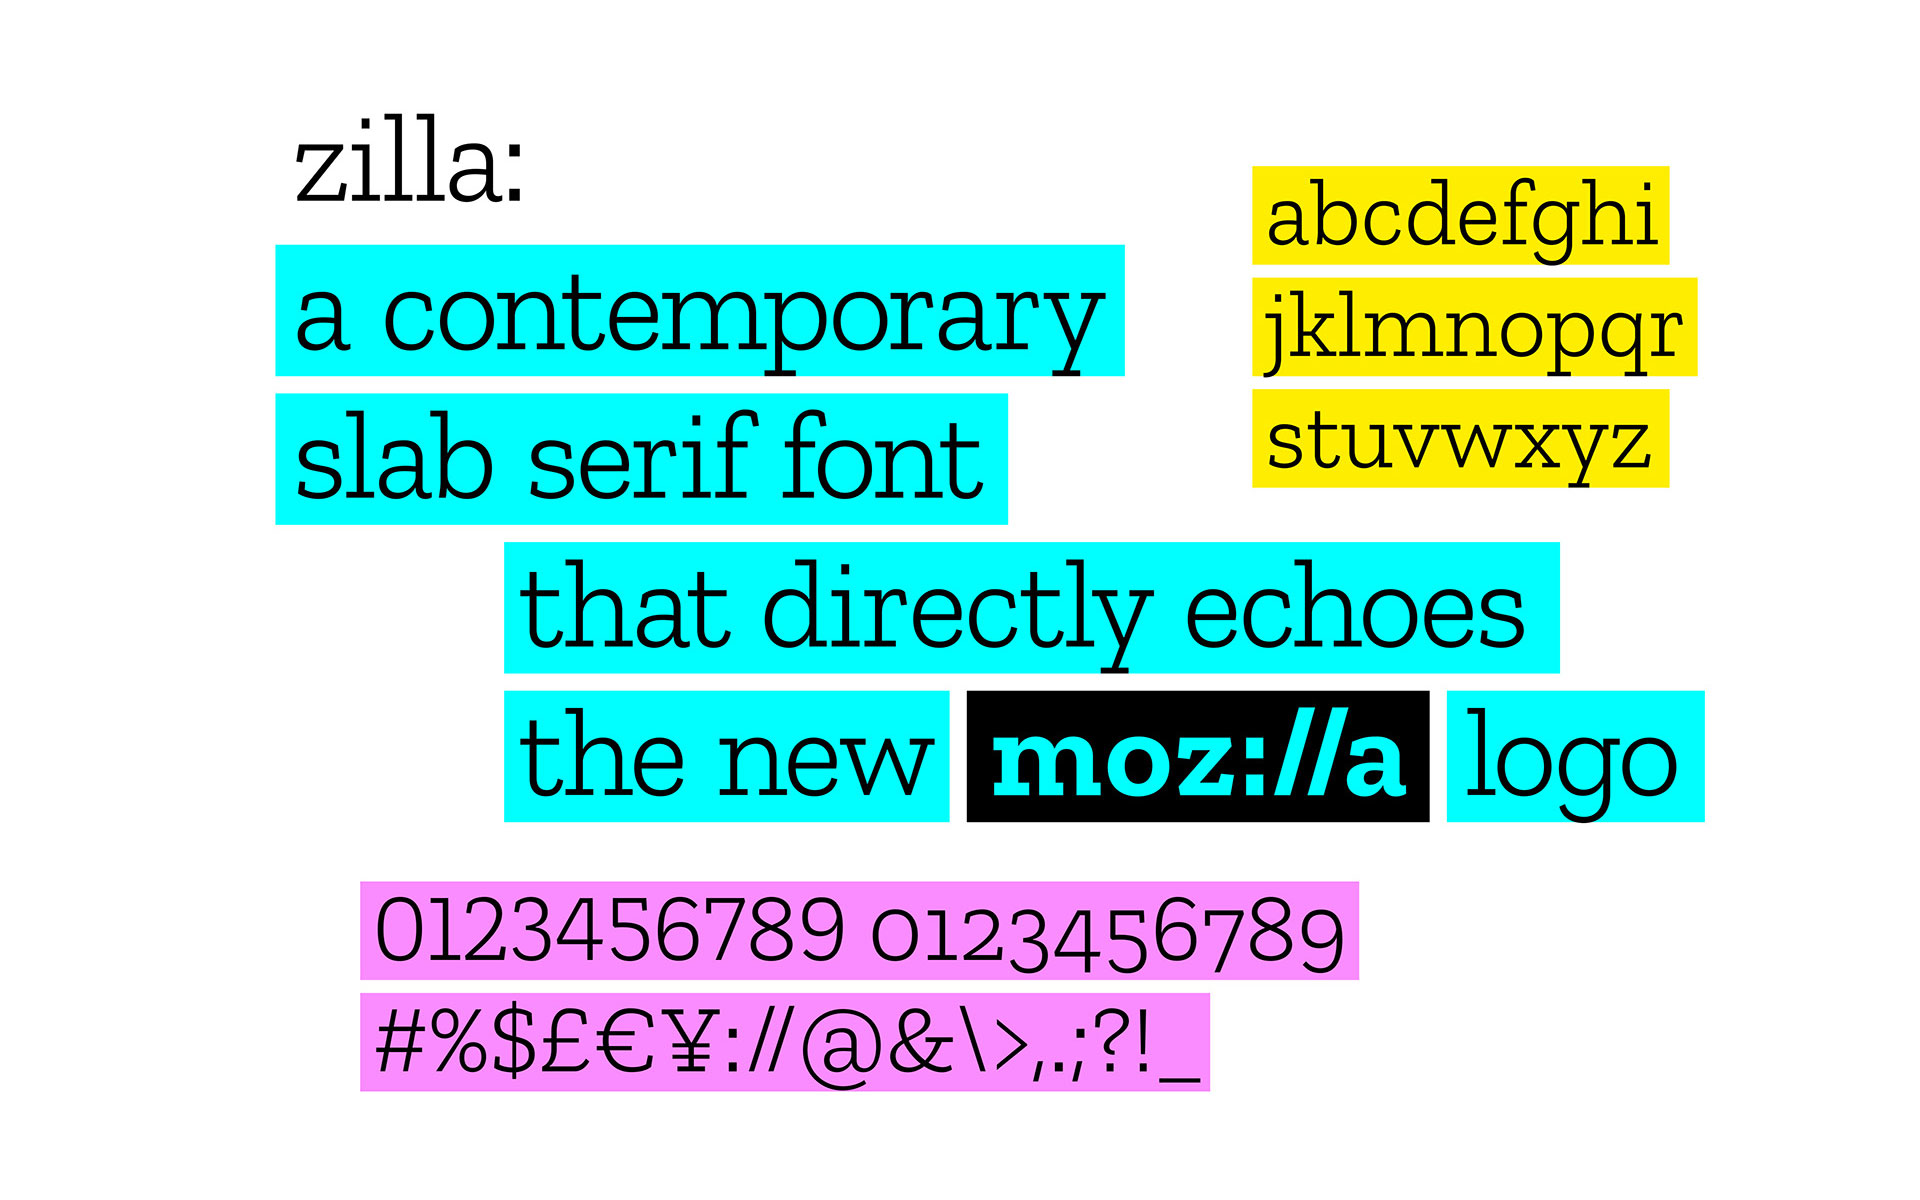 matter of design, mozilla, redesign, logotype, color scheme, typography, design, branding